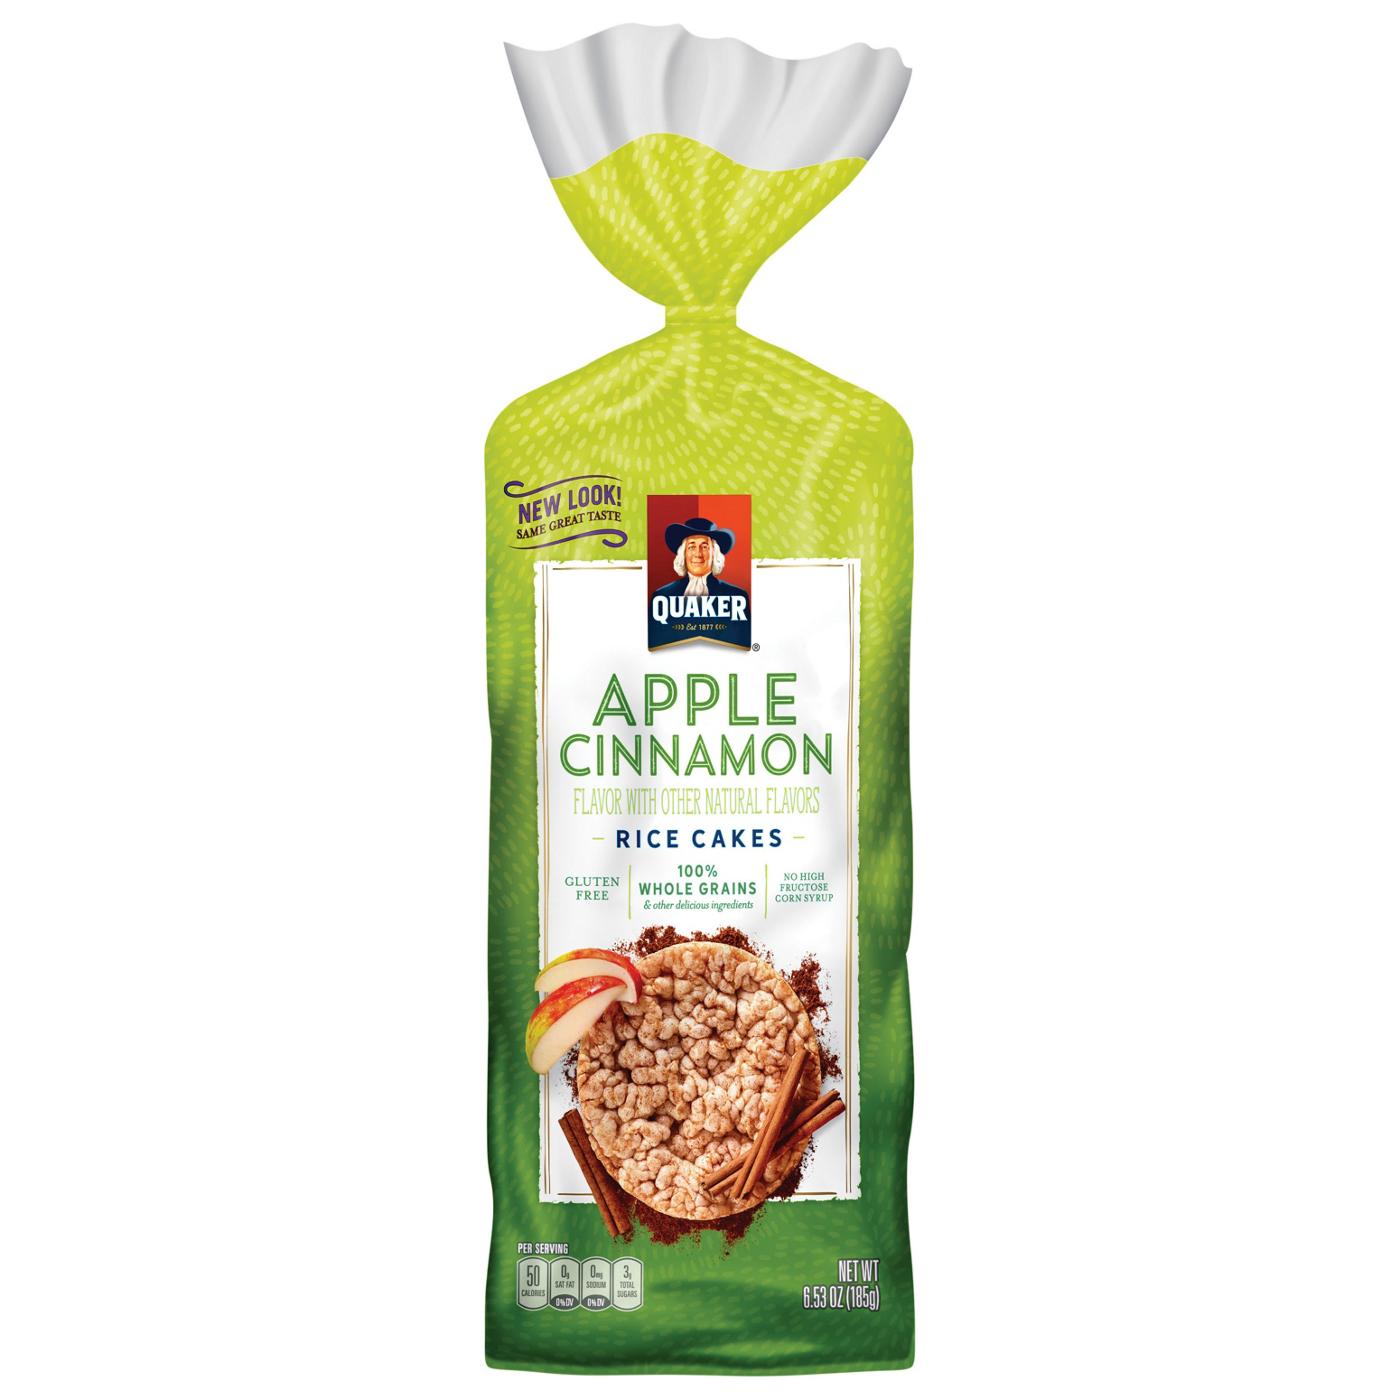 Quaker Apple Cinnamon Rice Cakes; image 1 of 2